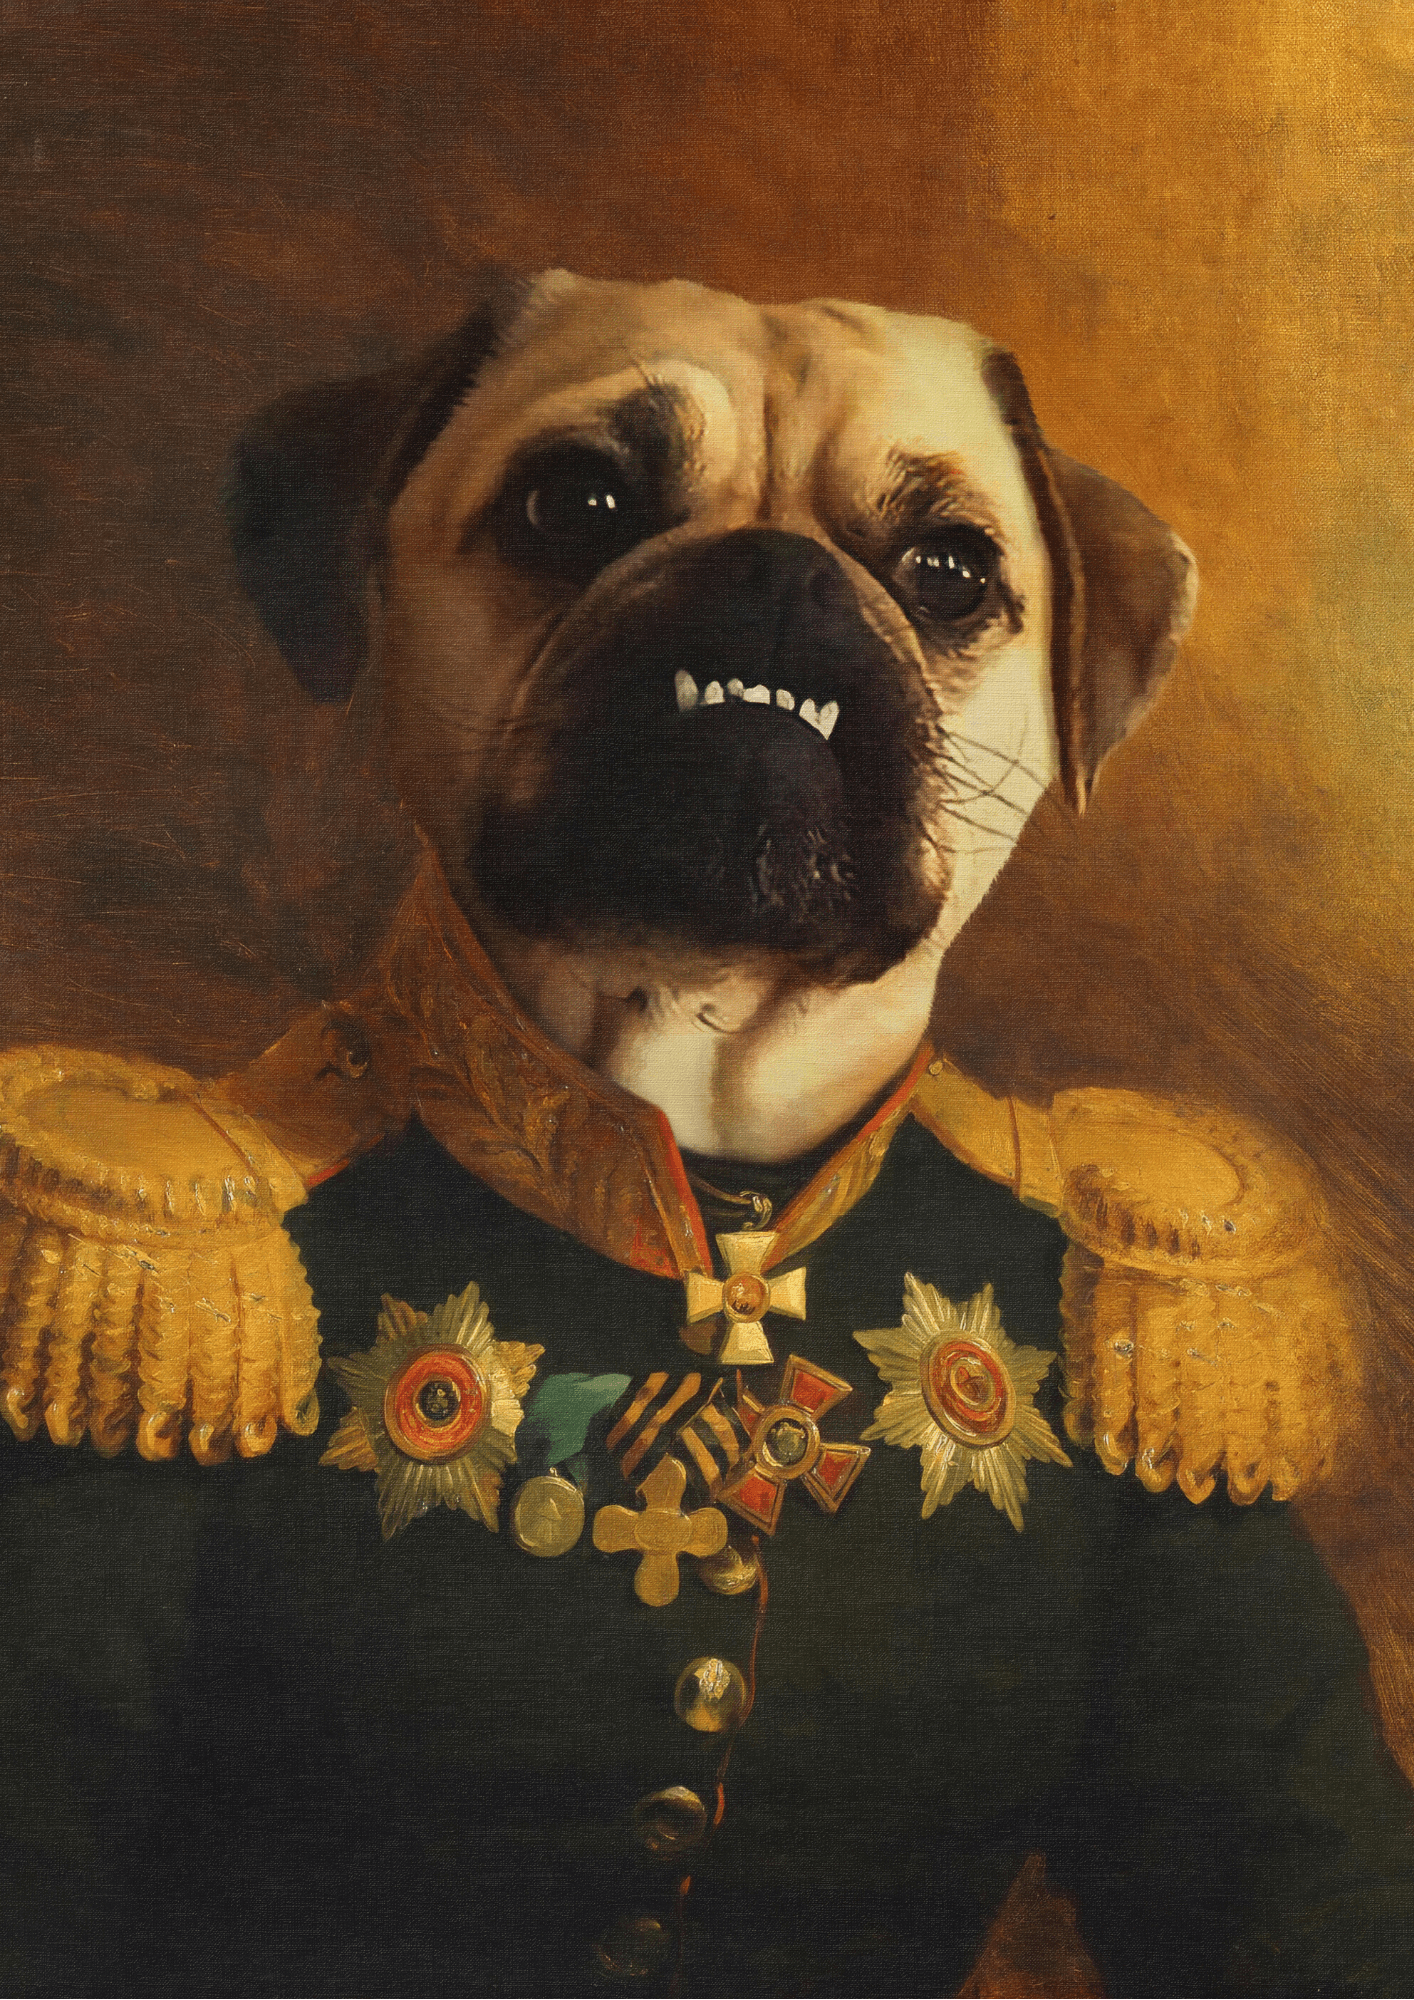 THE WAR GENERAL - CUSTOM PET PORTRAIT portrait-my-pet.com 